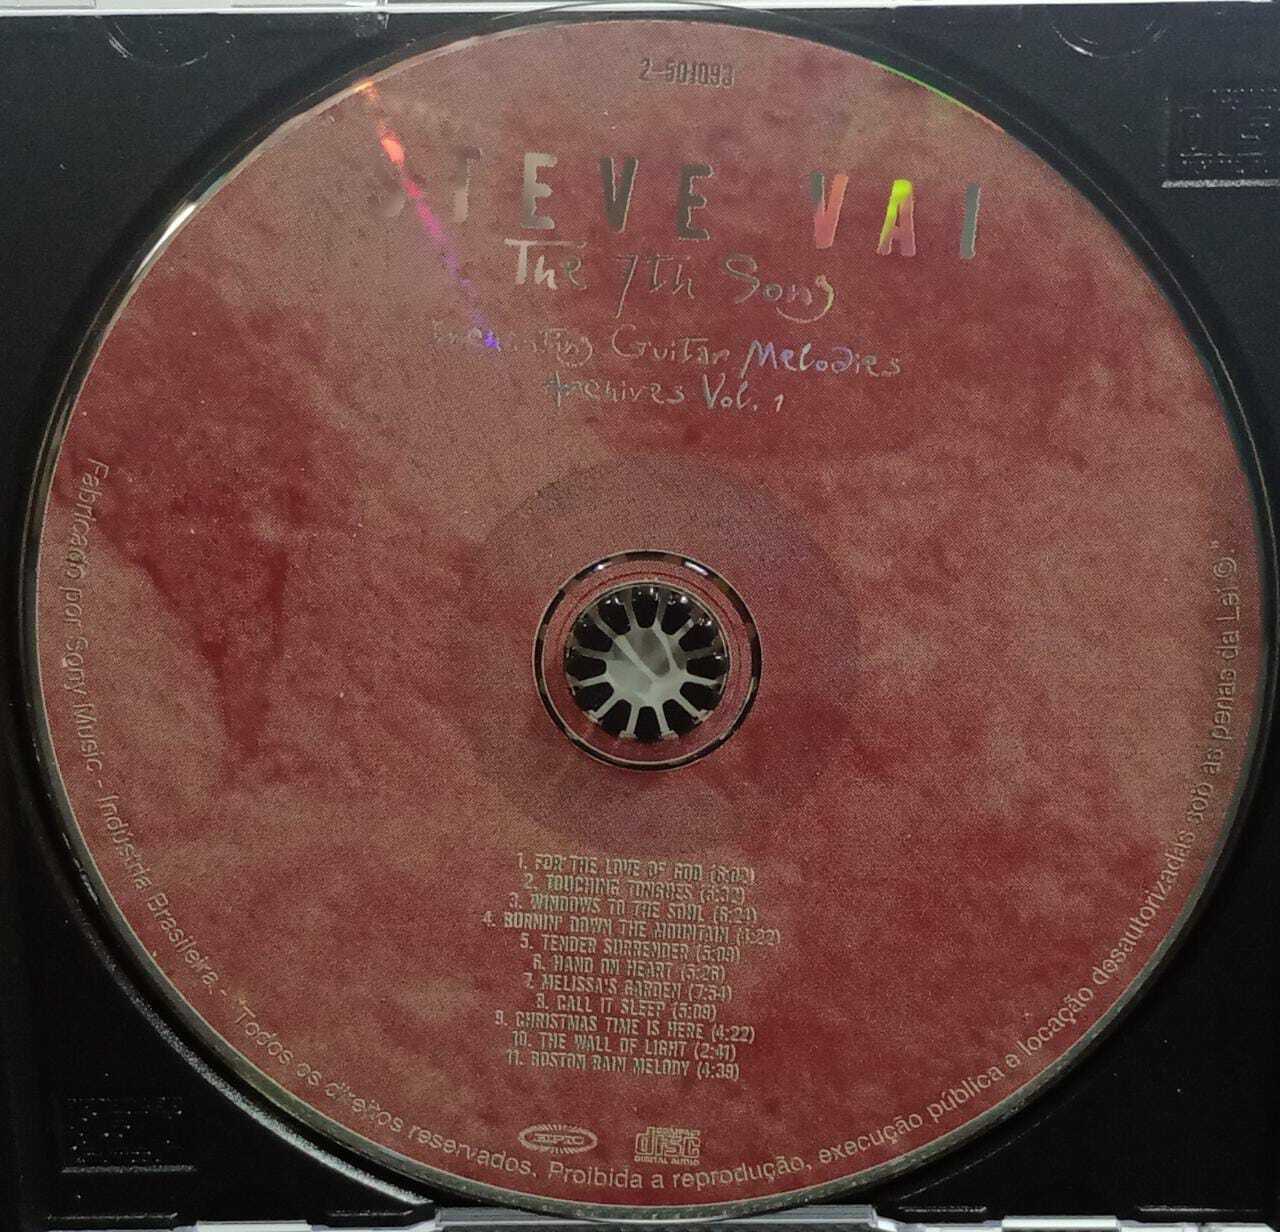 CD - Steve Vai - The 7th Song: Enchanting Guitar Melodies - Archives Vol. 1